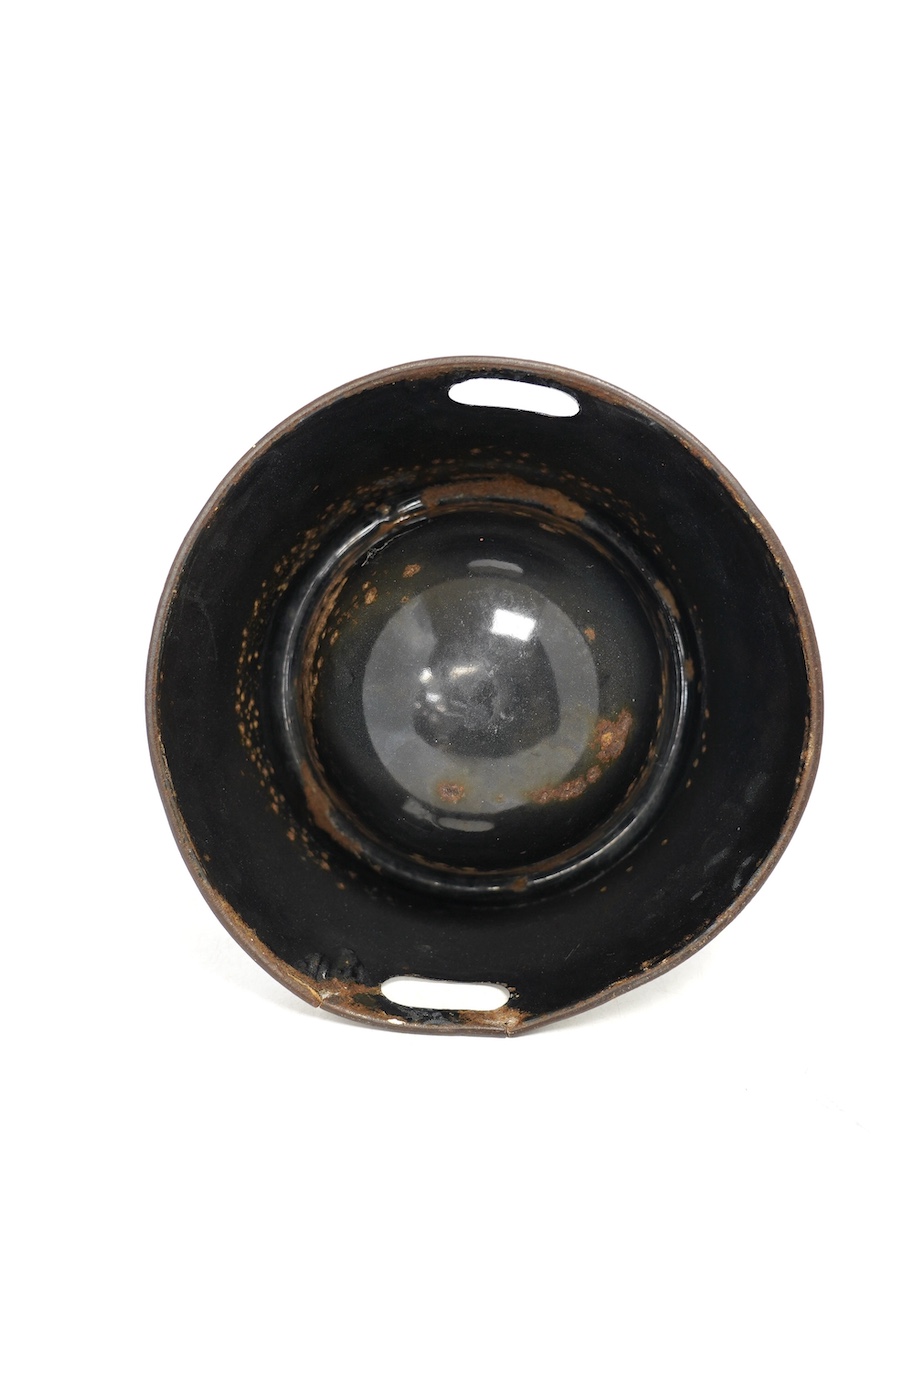 A vintage Spratt’s circular enamel advertising dog bowl, 27cm diameter, 10cm high. Condition - poor